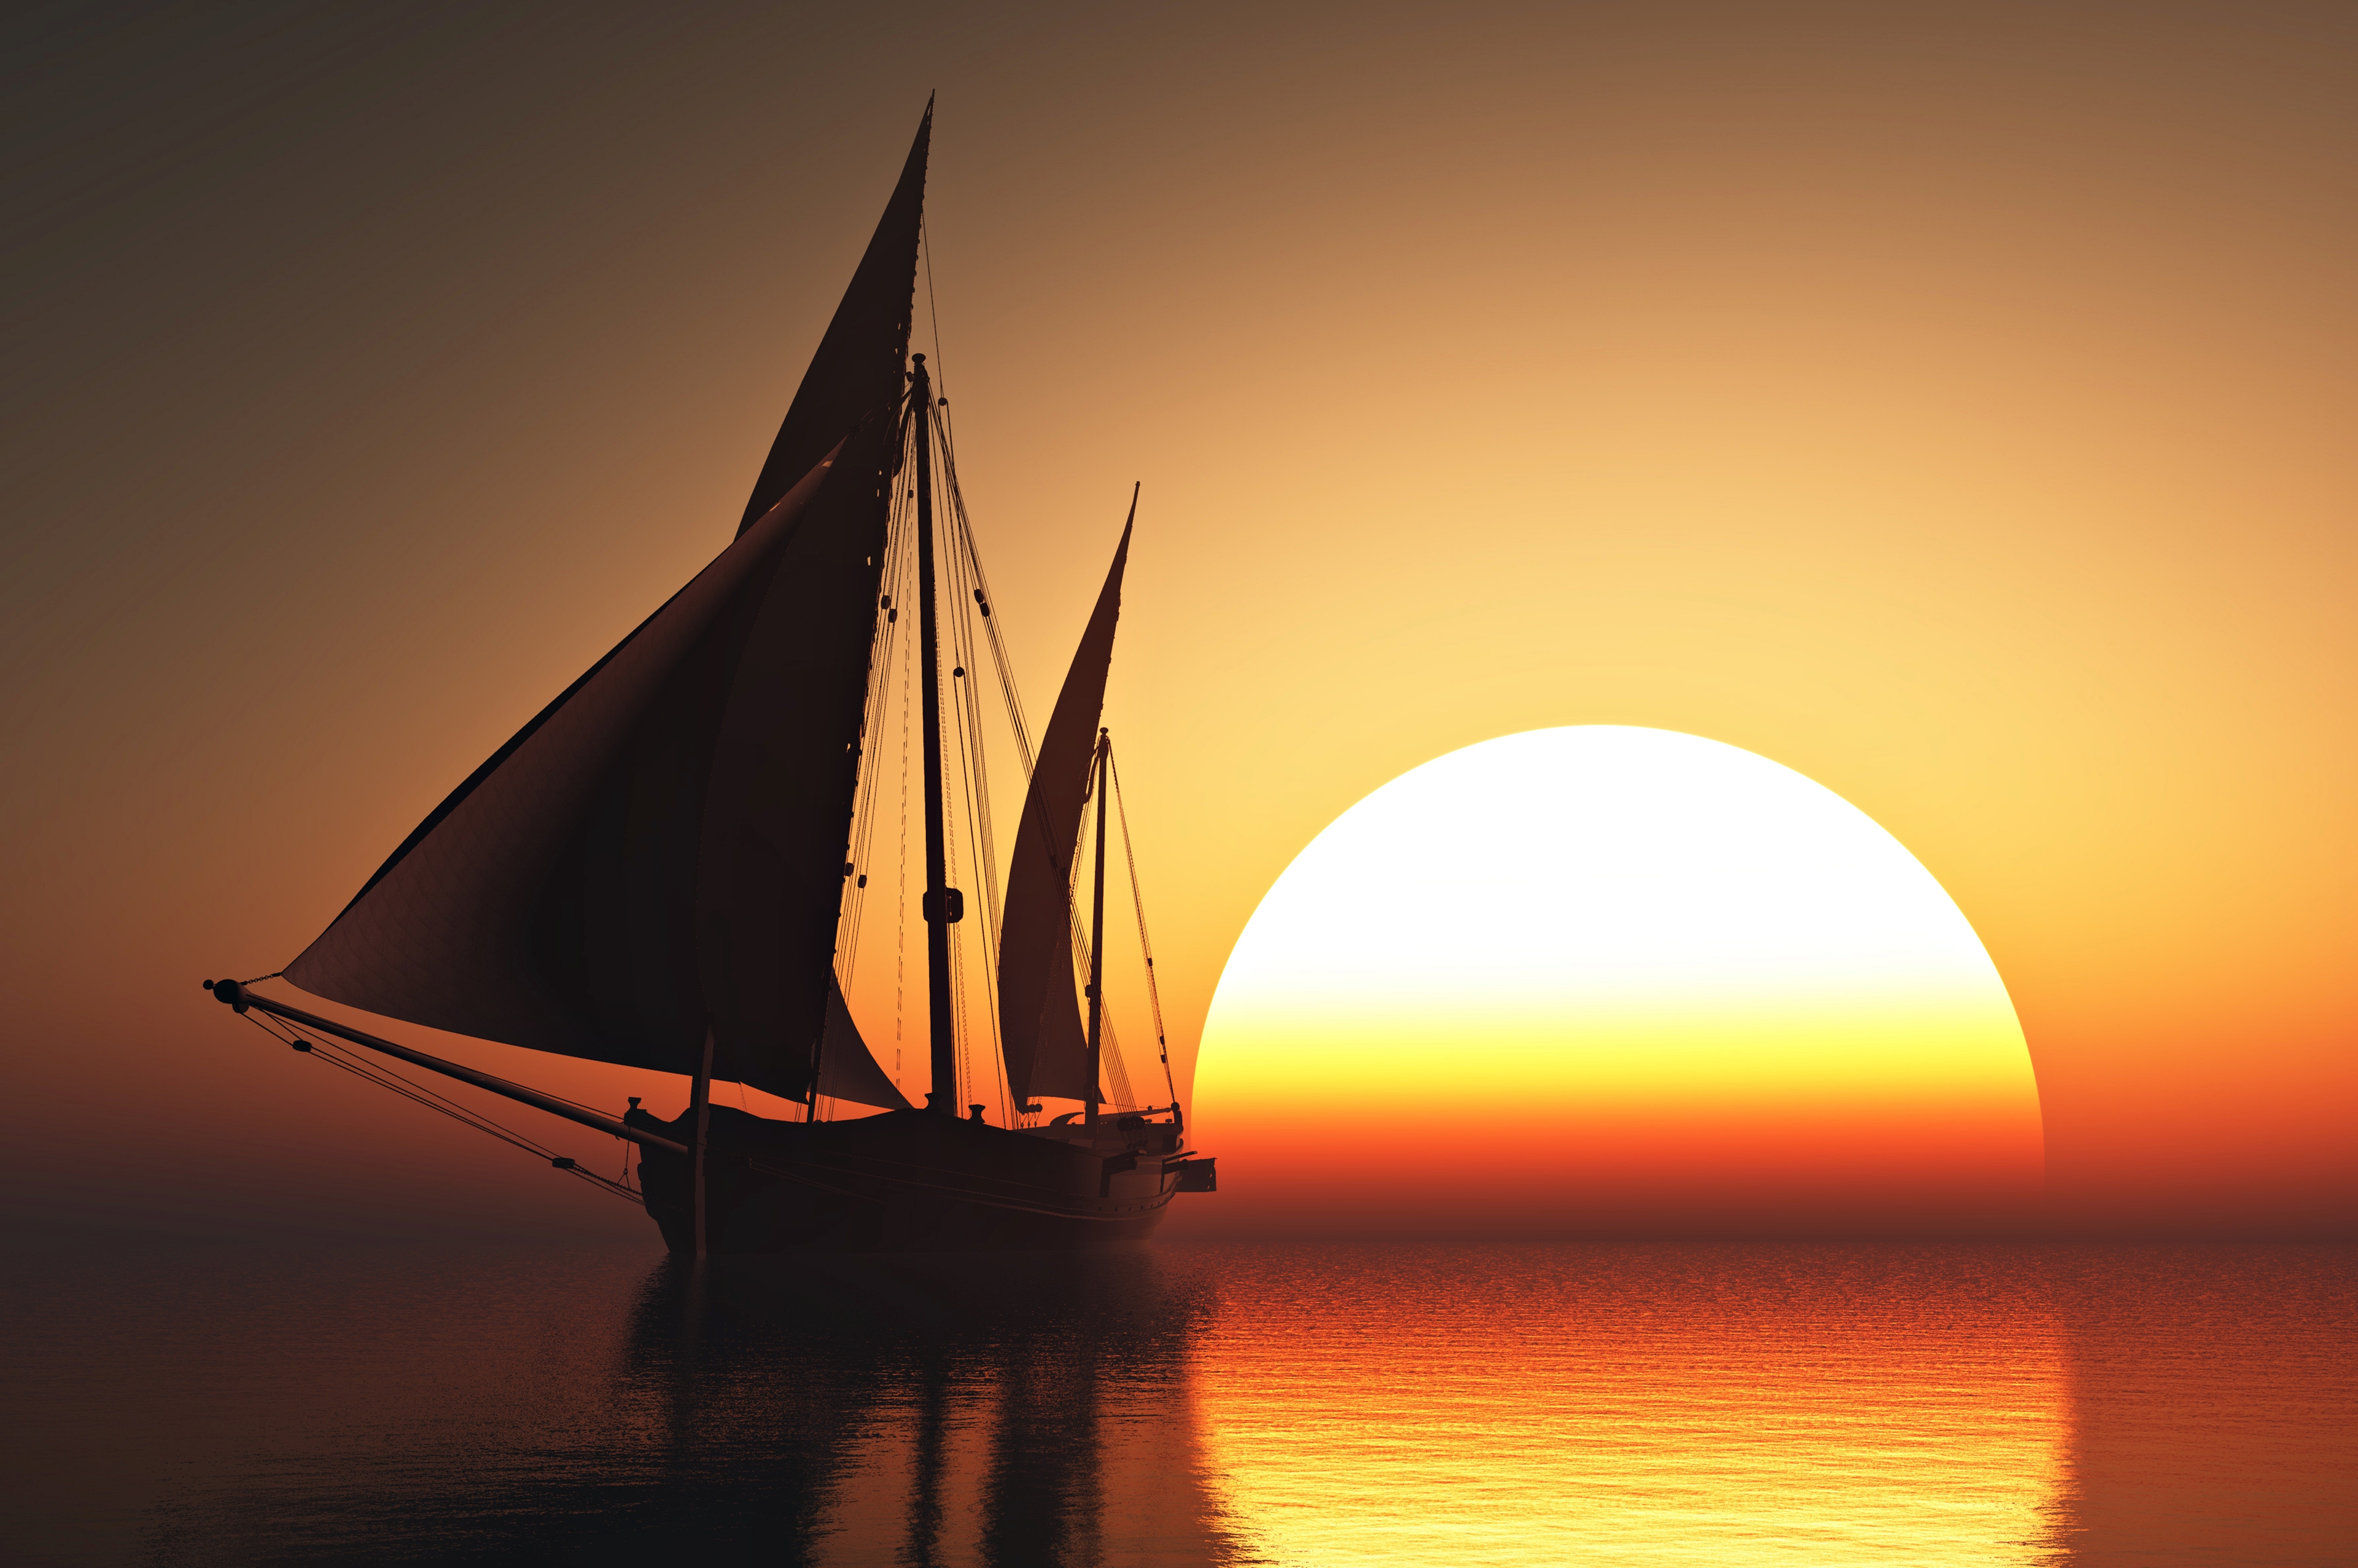 sun, yacht, sunset, sea, vehicles, sailing ship, boat, ocean, sailing